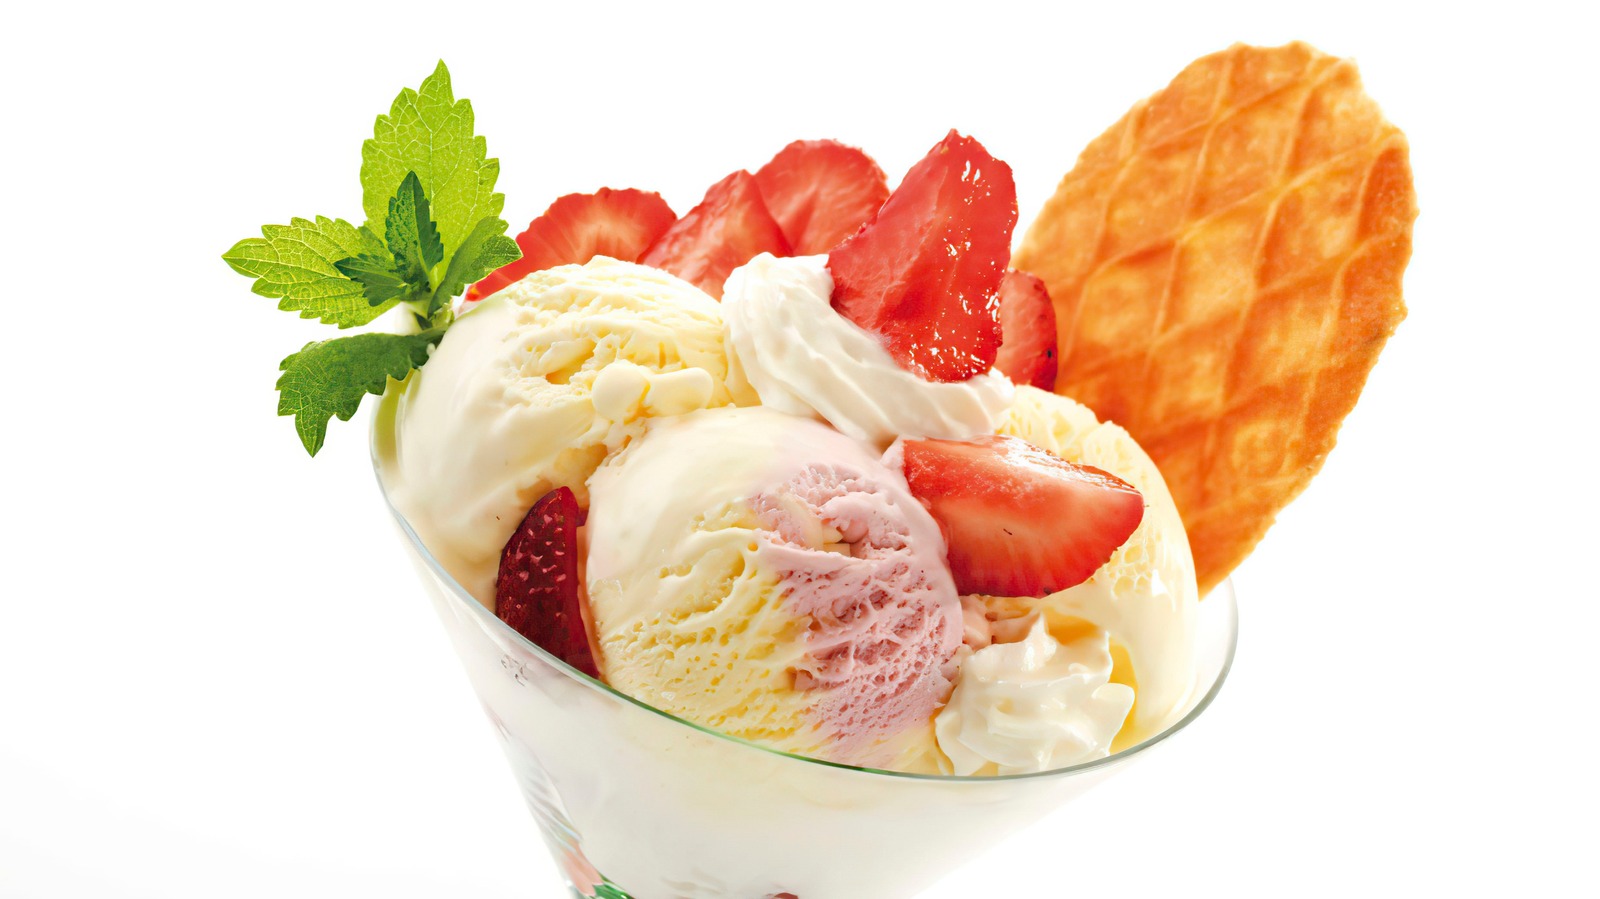 https://www.tastingtable.com/img/gallery/15best-ice-cream-brands-ranked-upgrade/l-intro-1653406408.jpg